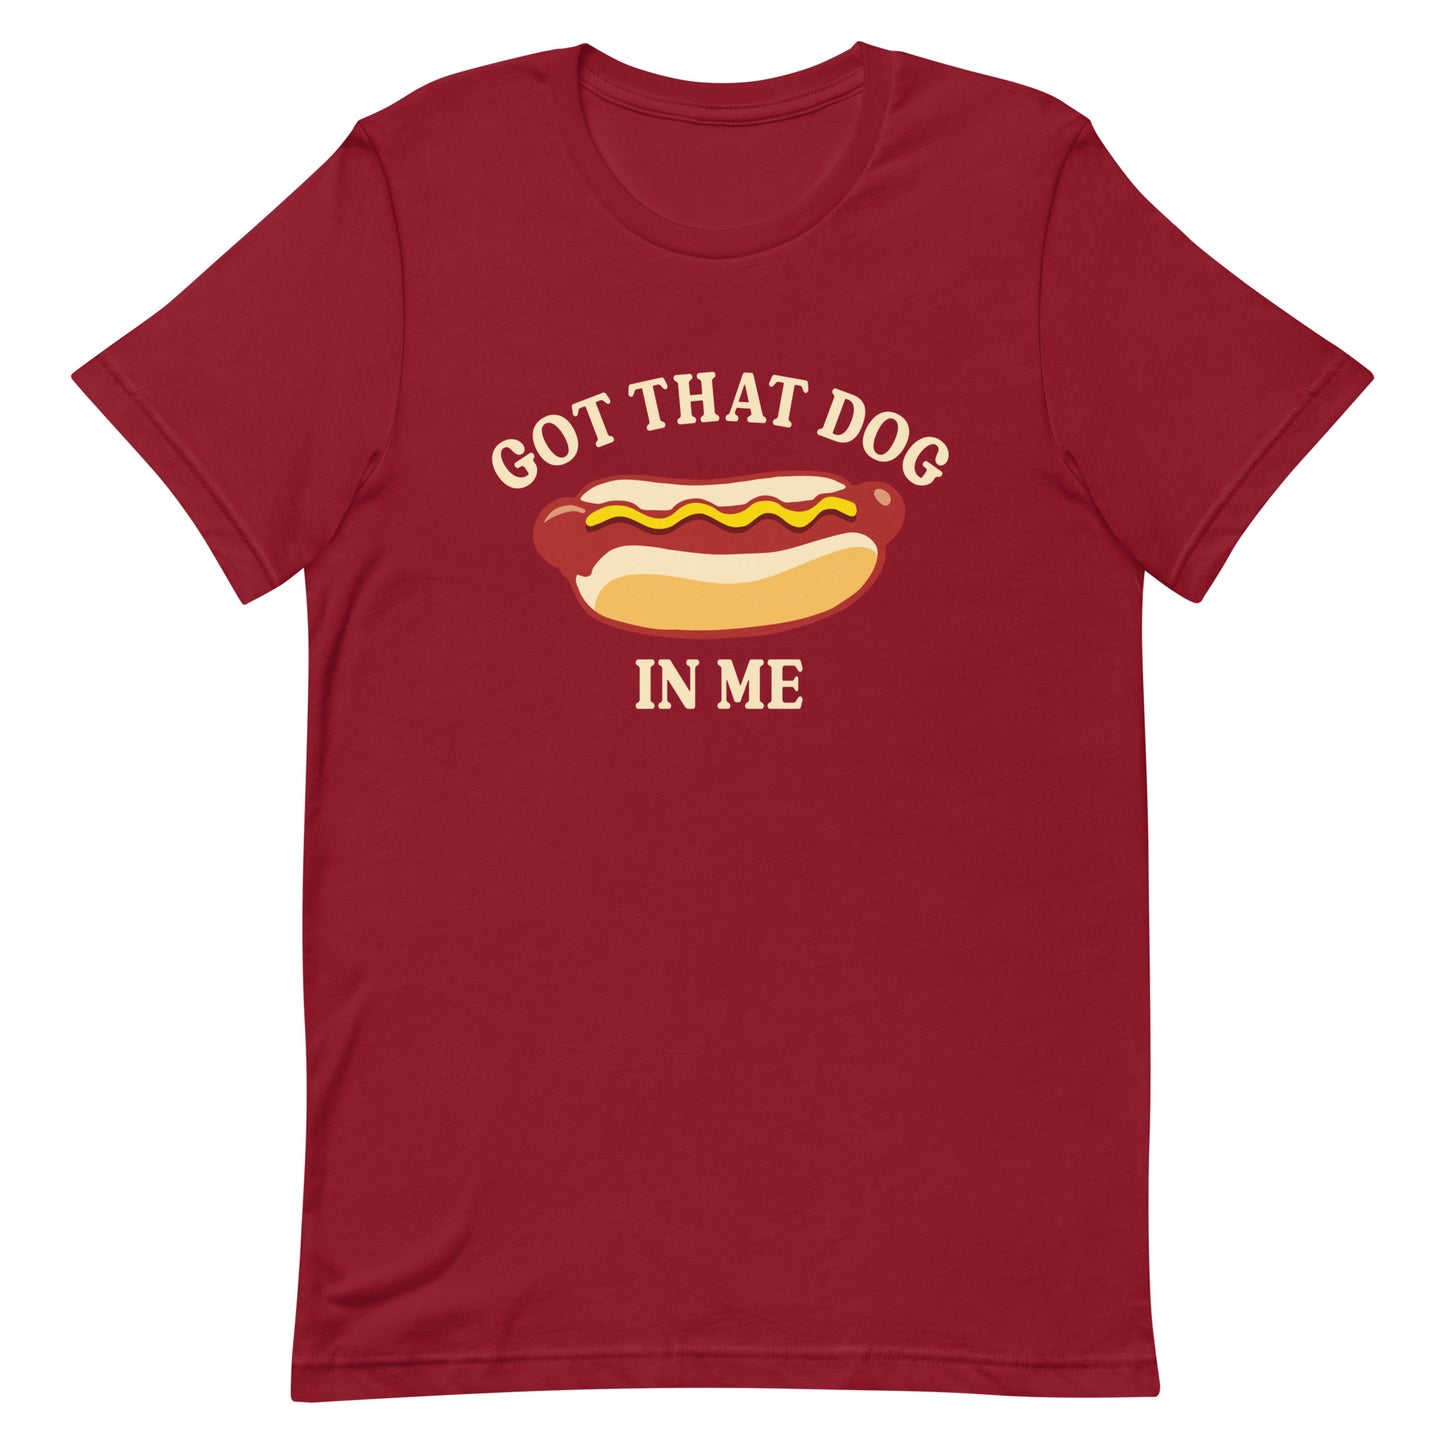 Got That Dog in Me (Hot Dog) Unisex t-shirt